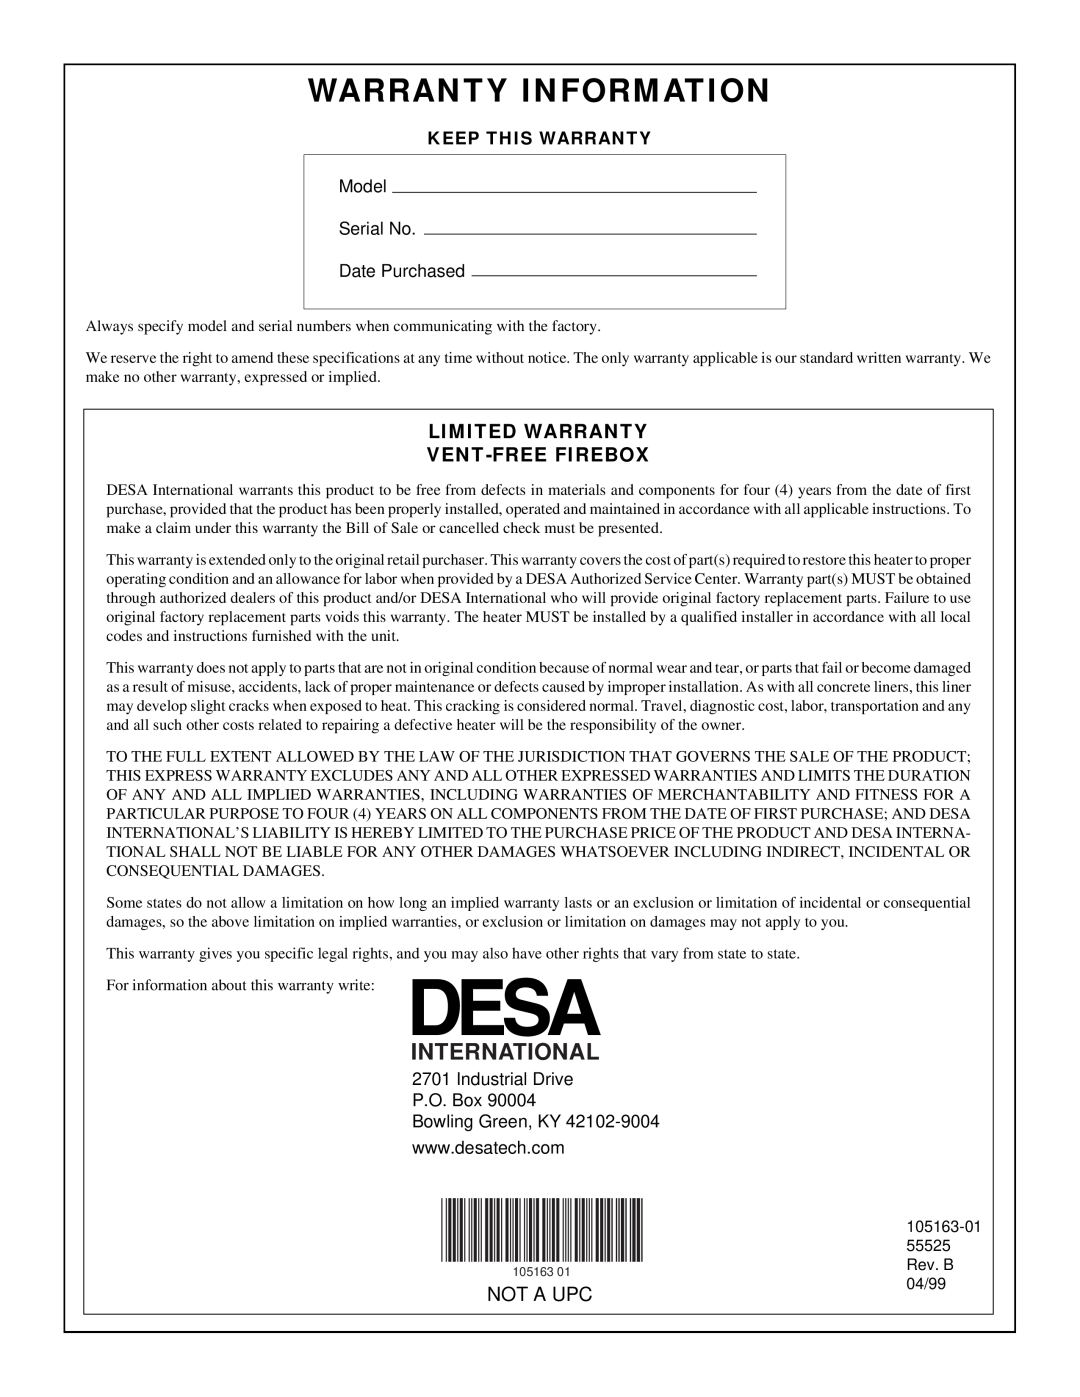 Desa FBPS installation manual Warranty Information, International, Not A Upc, Model Serial No Date Purchased 